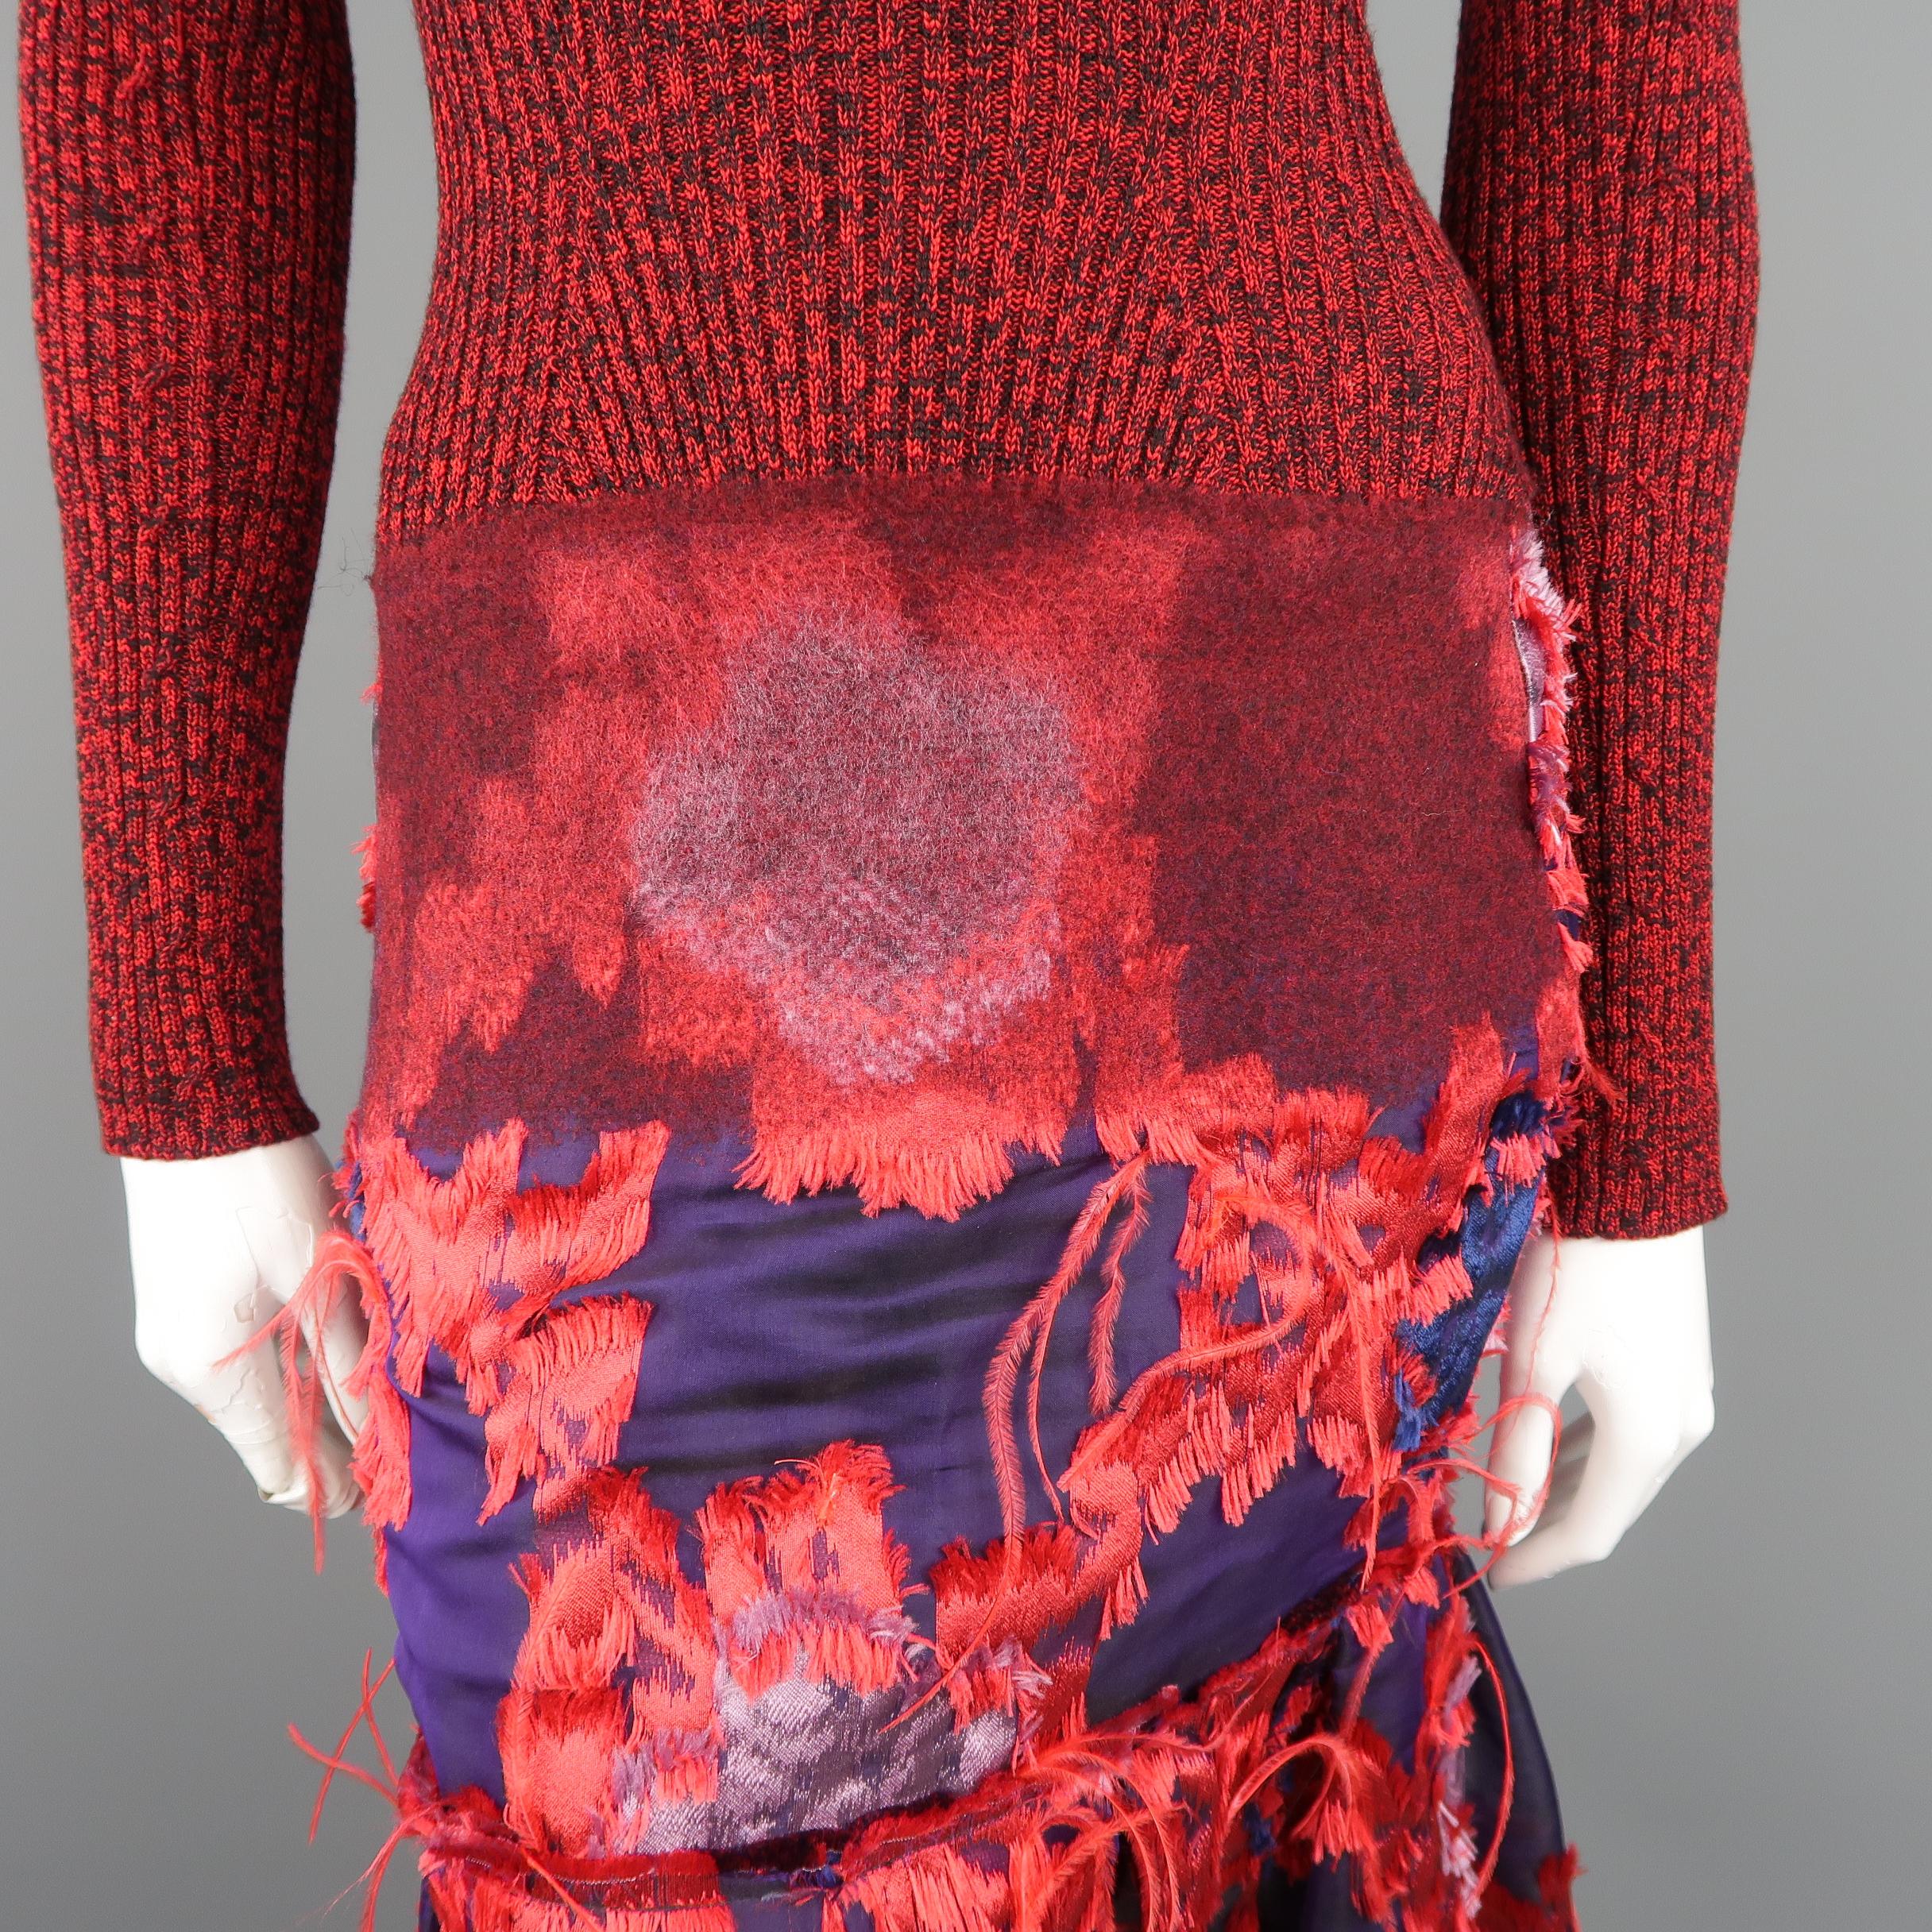 ERDEM Gown - Fall 2015 Runway - Red, Purple, Knit, Taffeta Feather Evening Dress 1